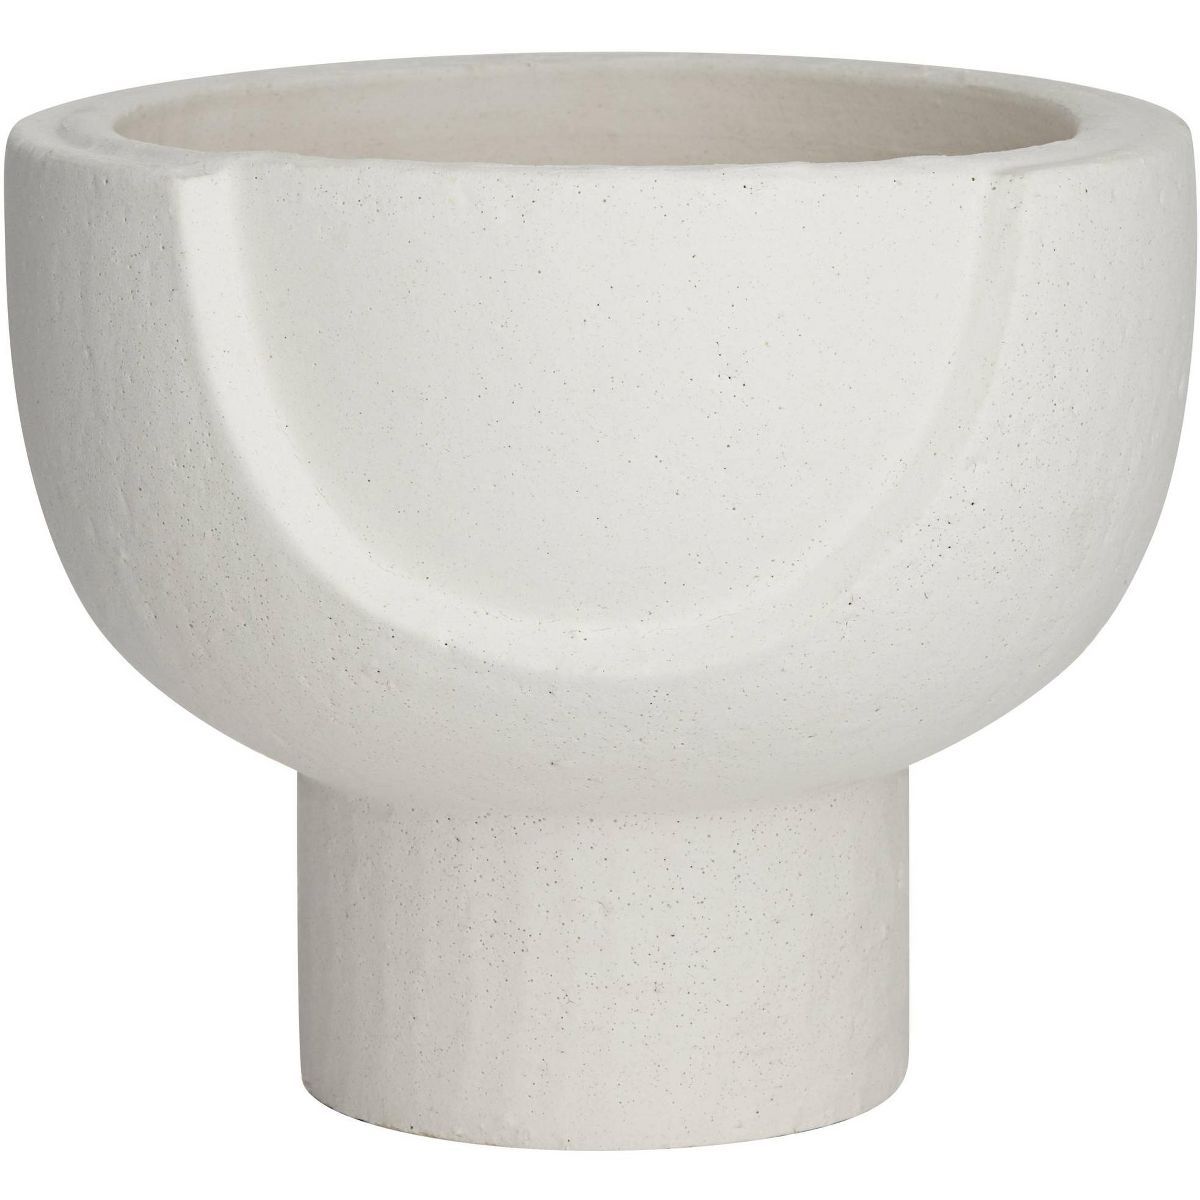 Studio 55D Bletheny White Ceramic Pedestal Decorative Bowl | Target